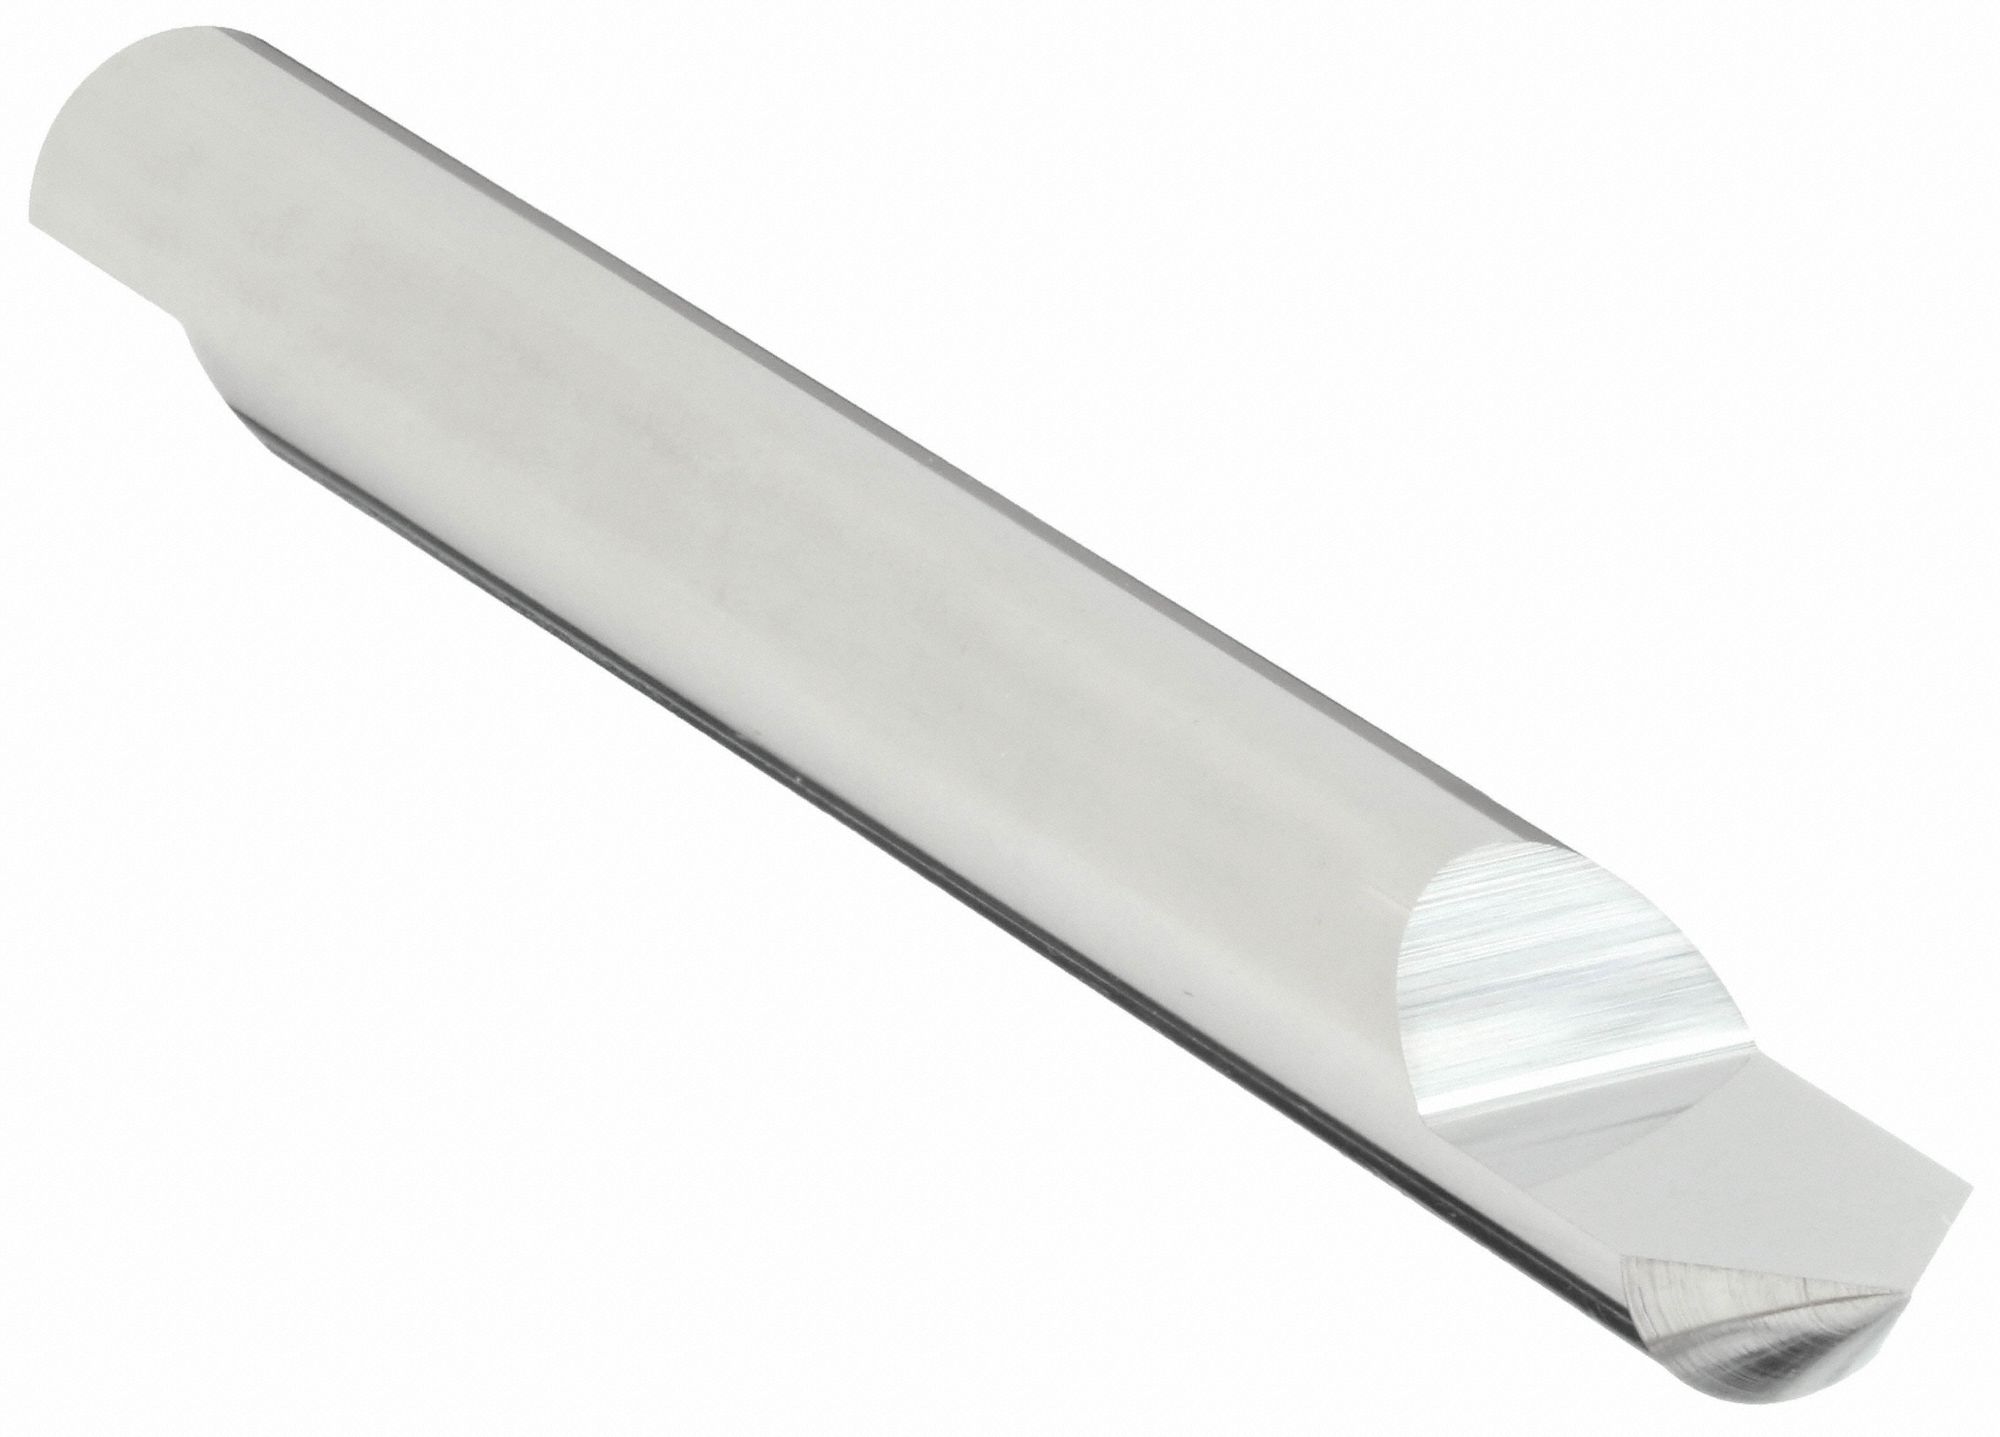 MICRO 100 RNC-375-1 Engraving Tool,1/2 L of Cut,Carbide